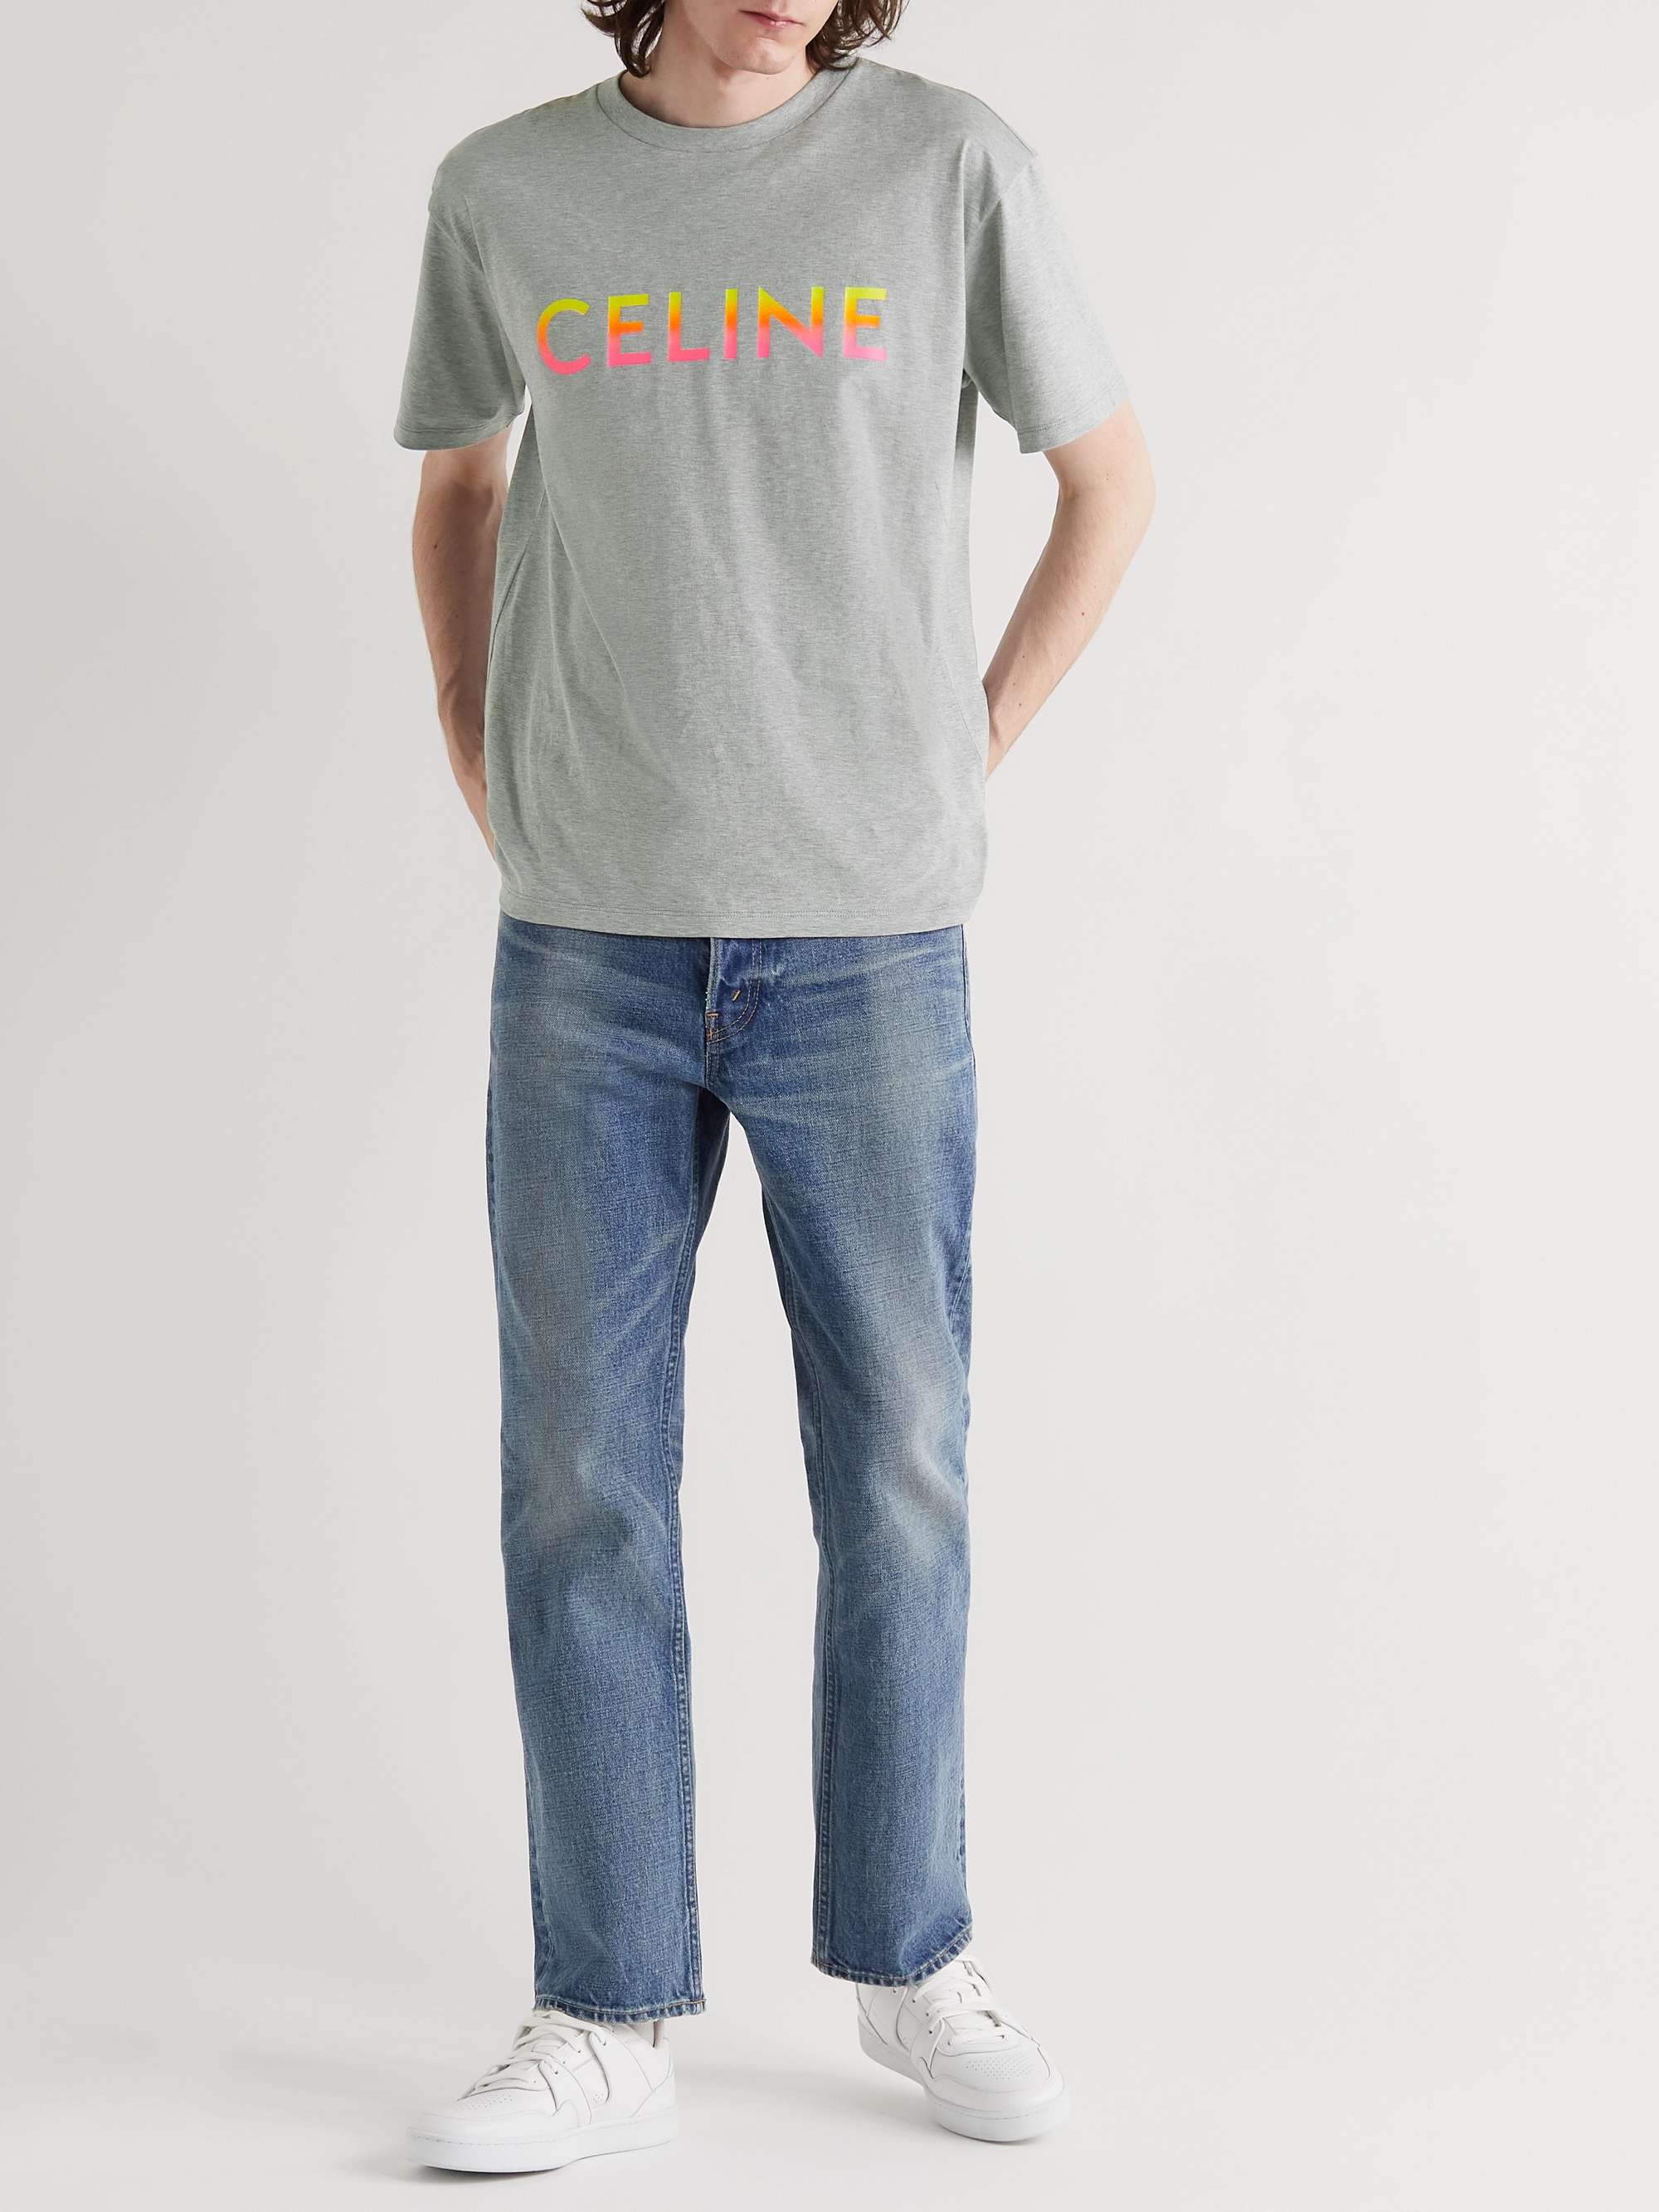 Celine Homme Oversized logo-print Cotton-jersey T-Shirt - Men - Gray T-shirts - XL